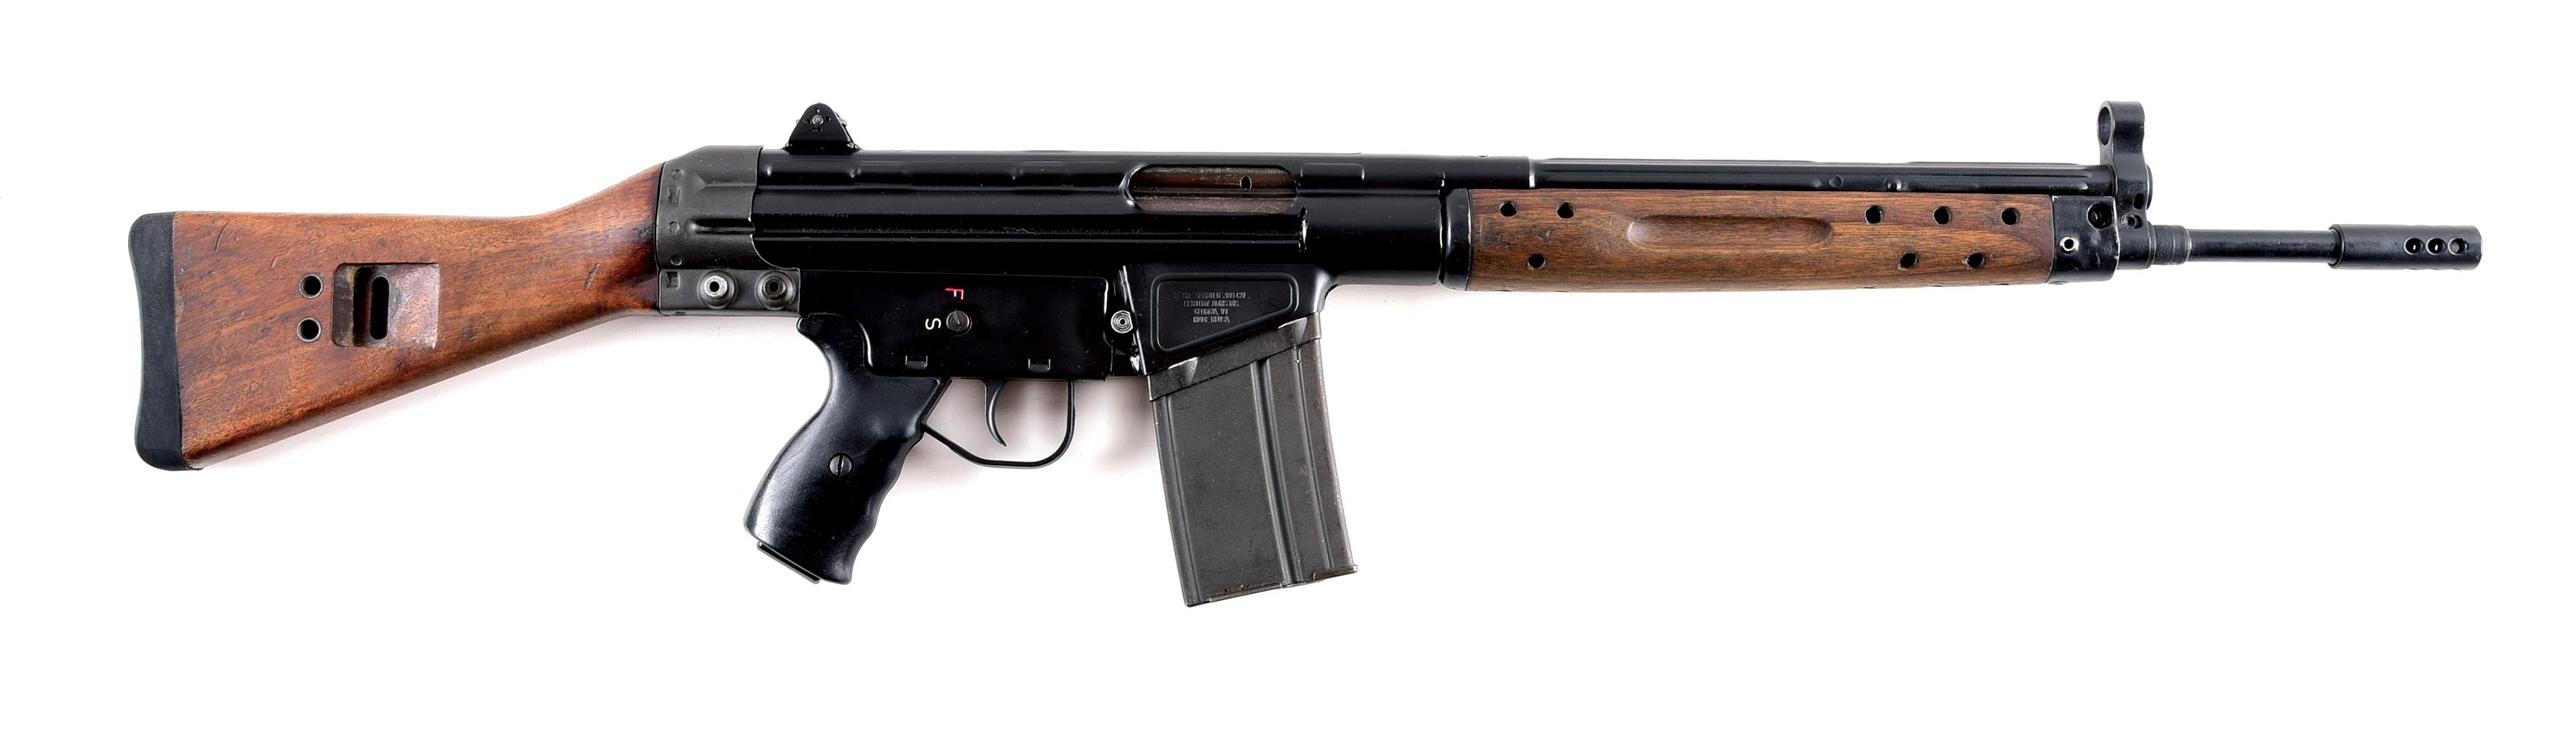 (M) century arms cetme sporter semi automatic rifle. 